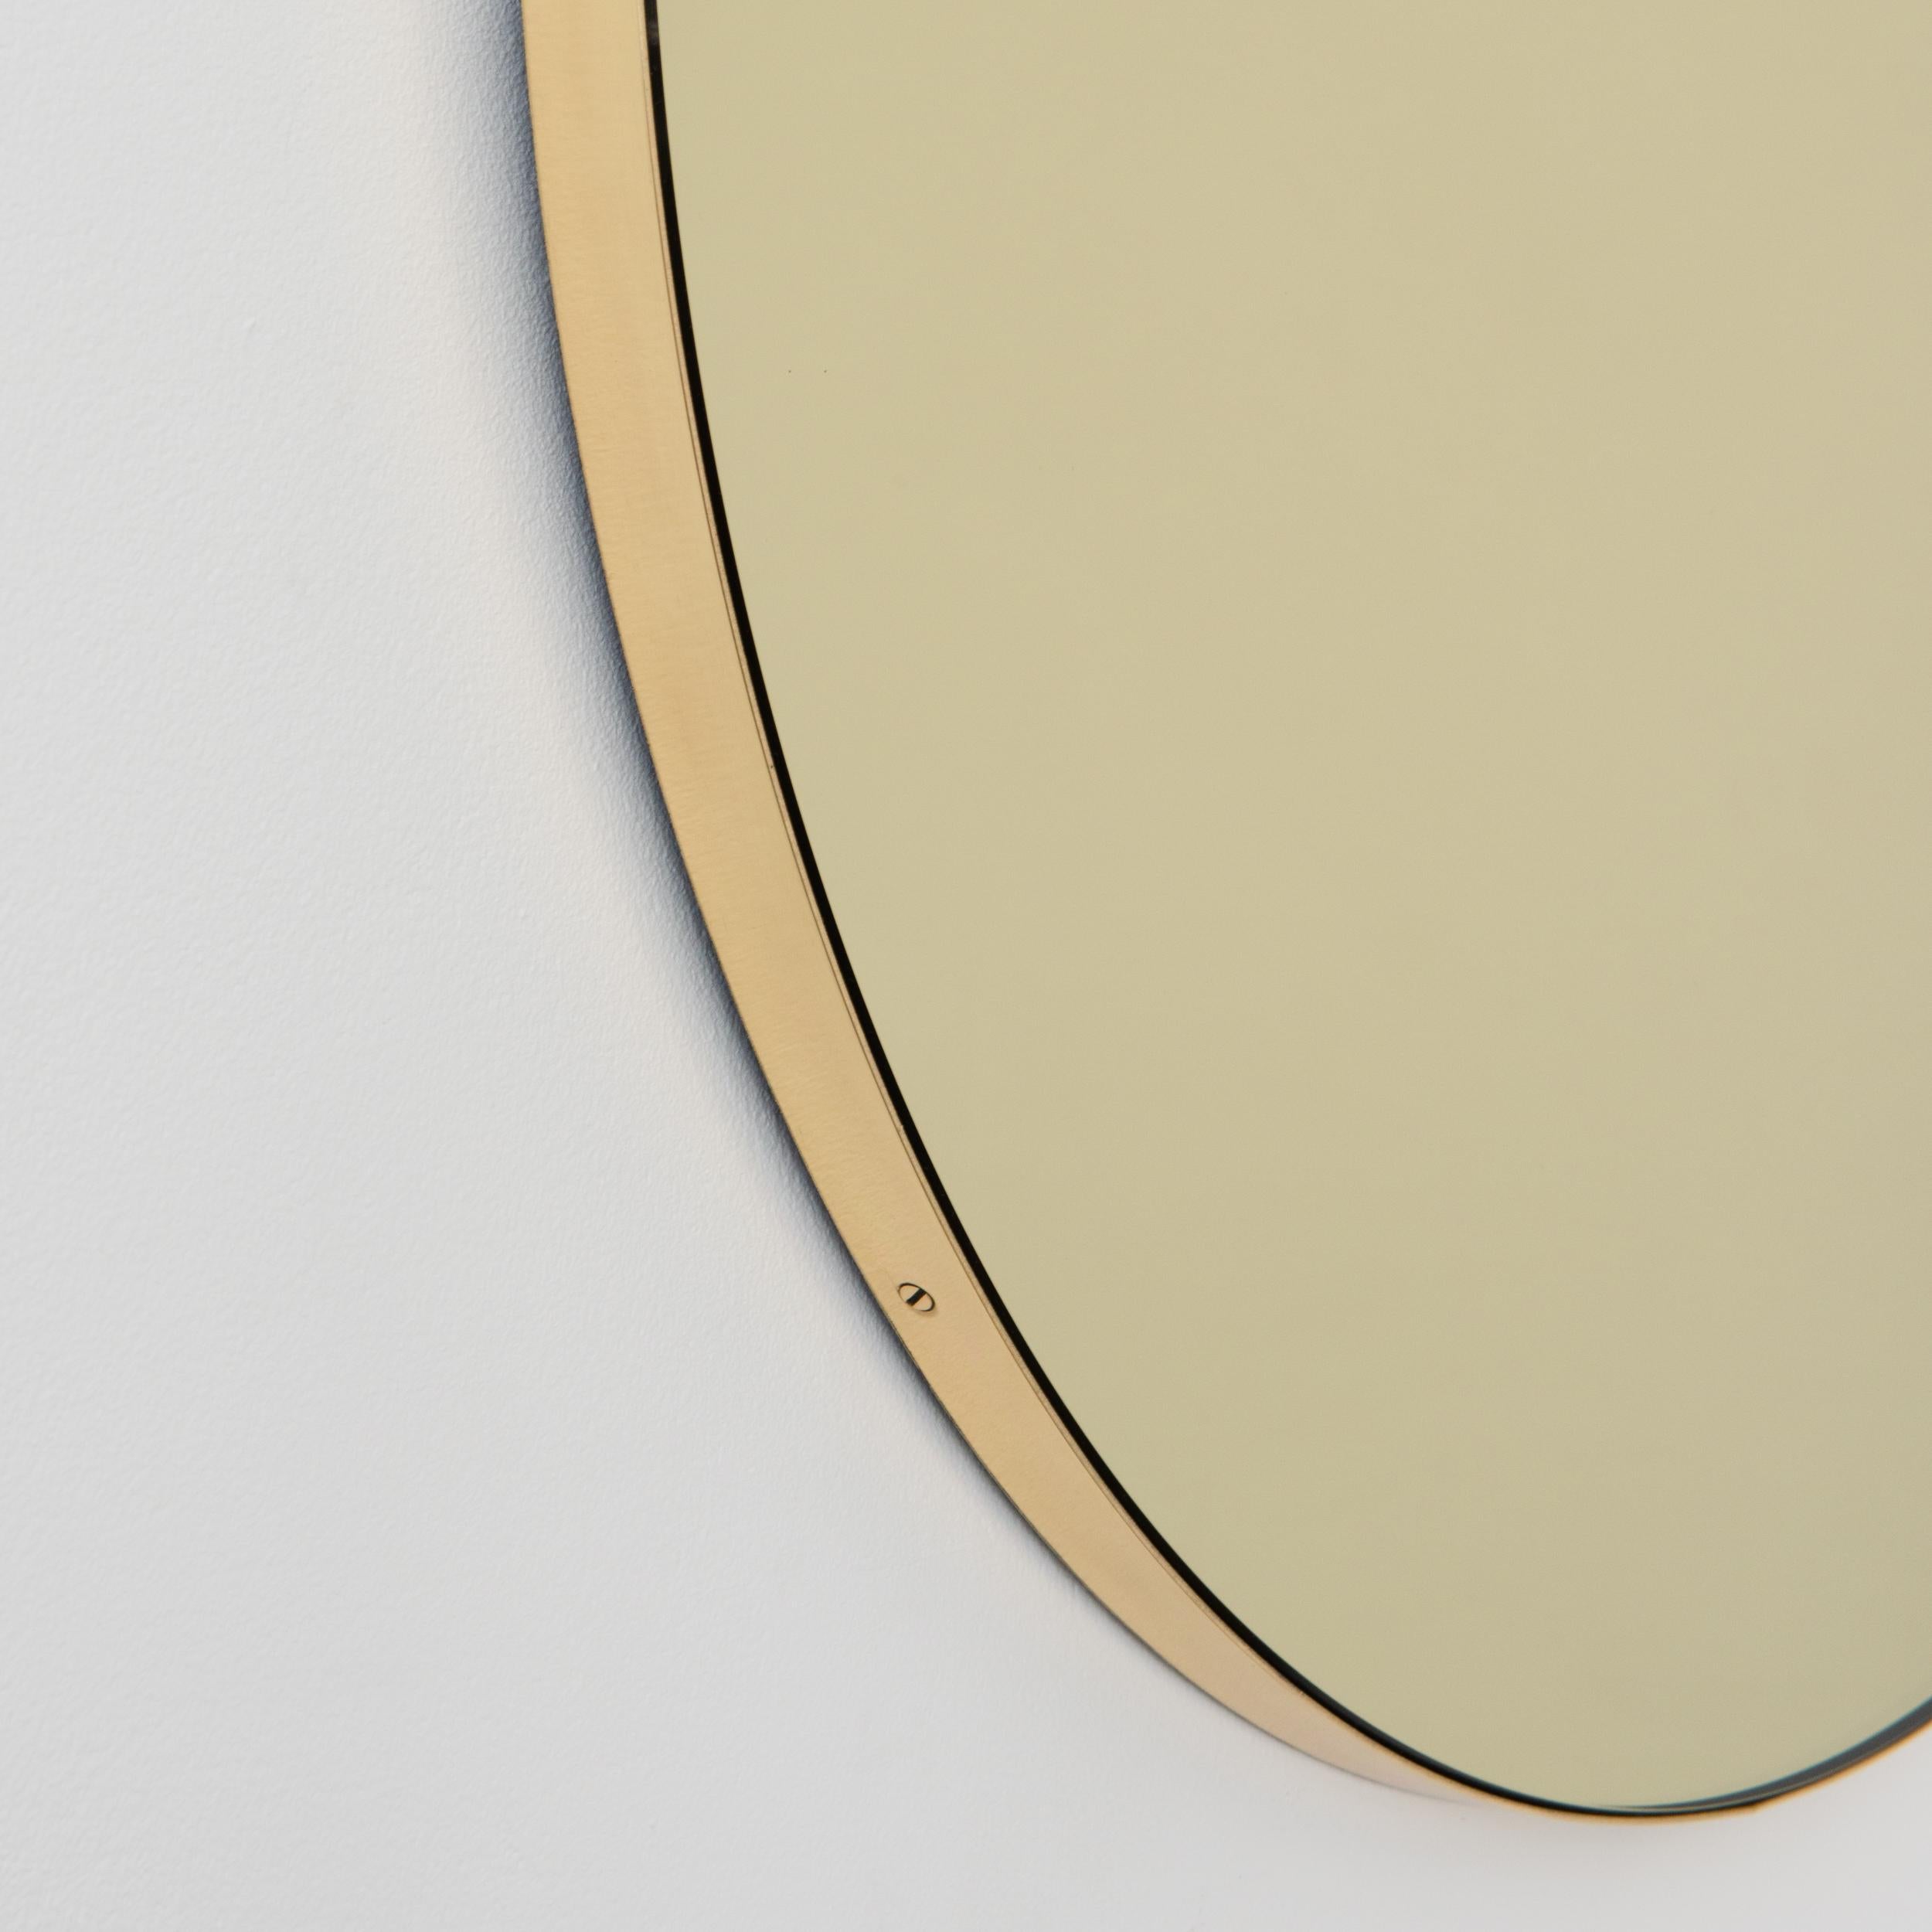 Britannique En stock, miroir contemporain rond Orbis teinté or, cadre en laiton, moyen en vente